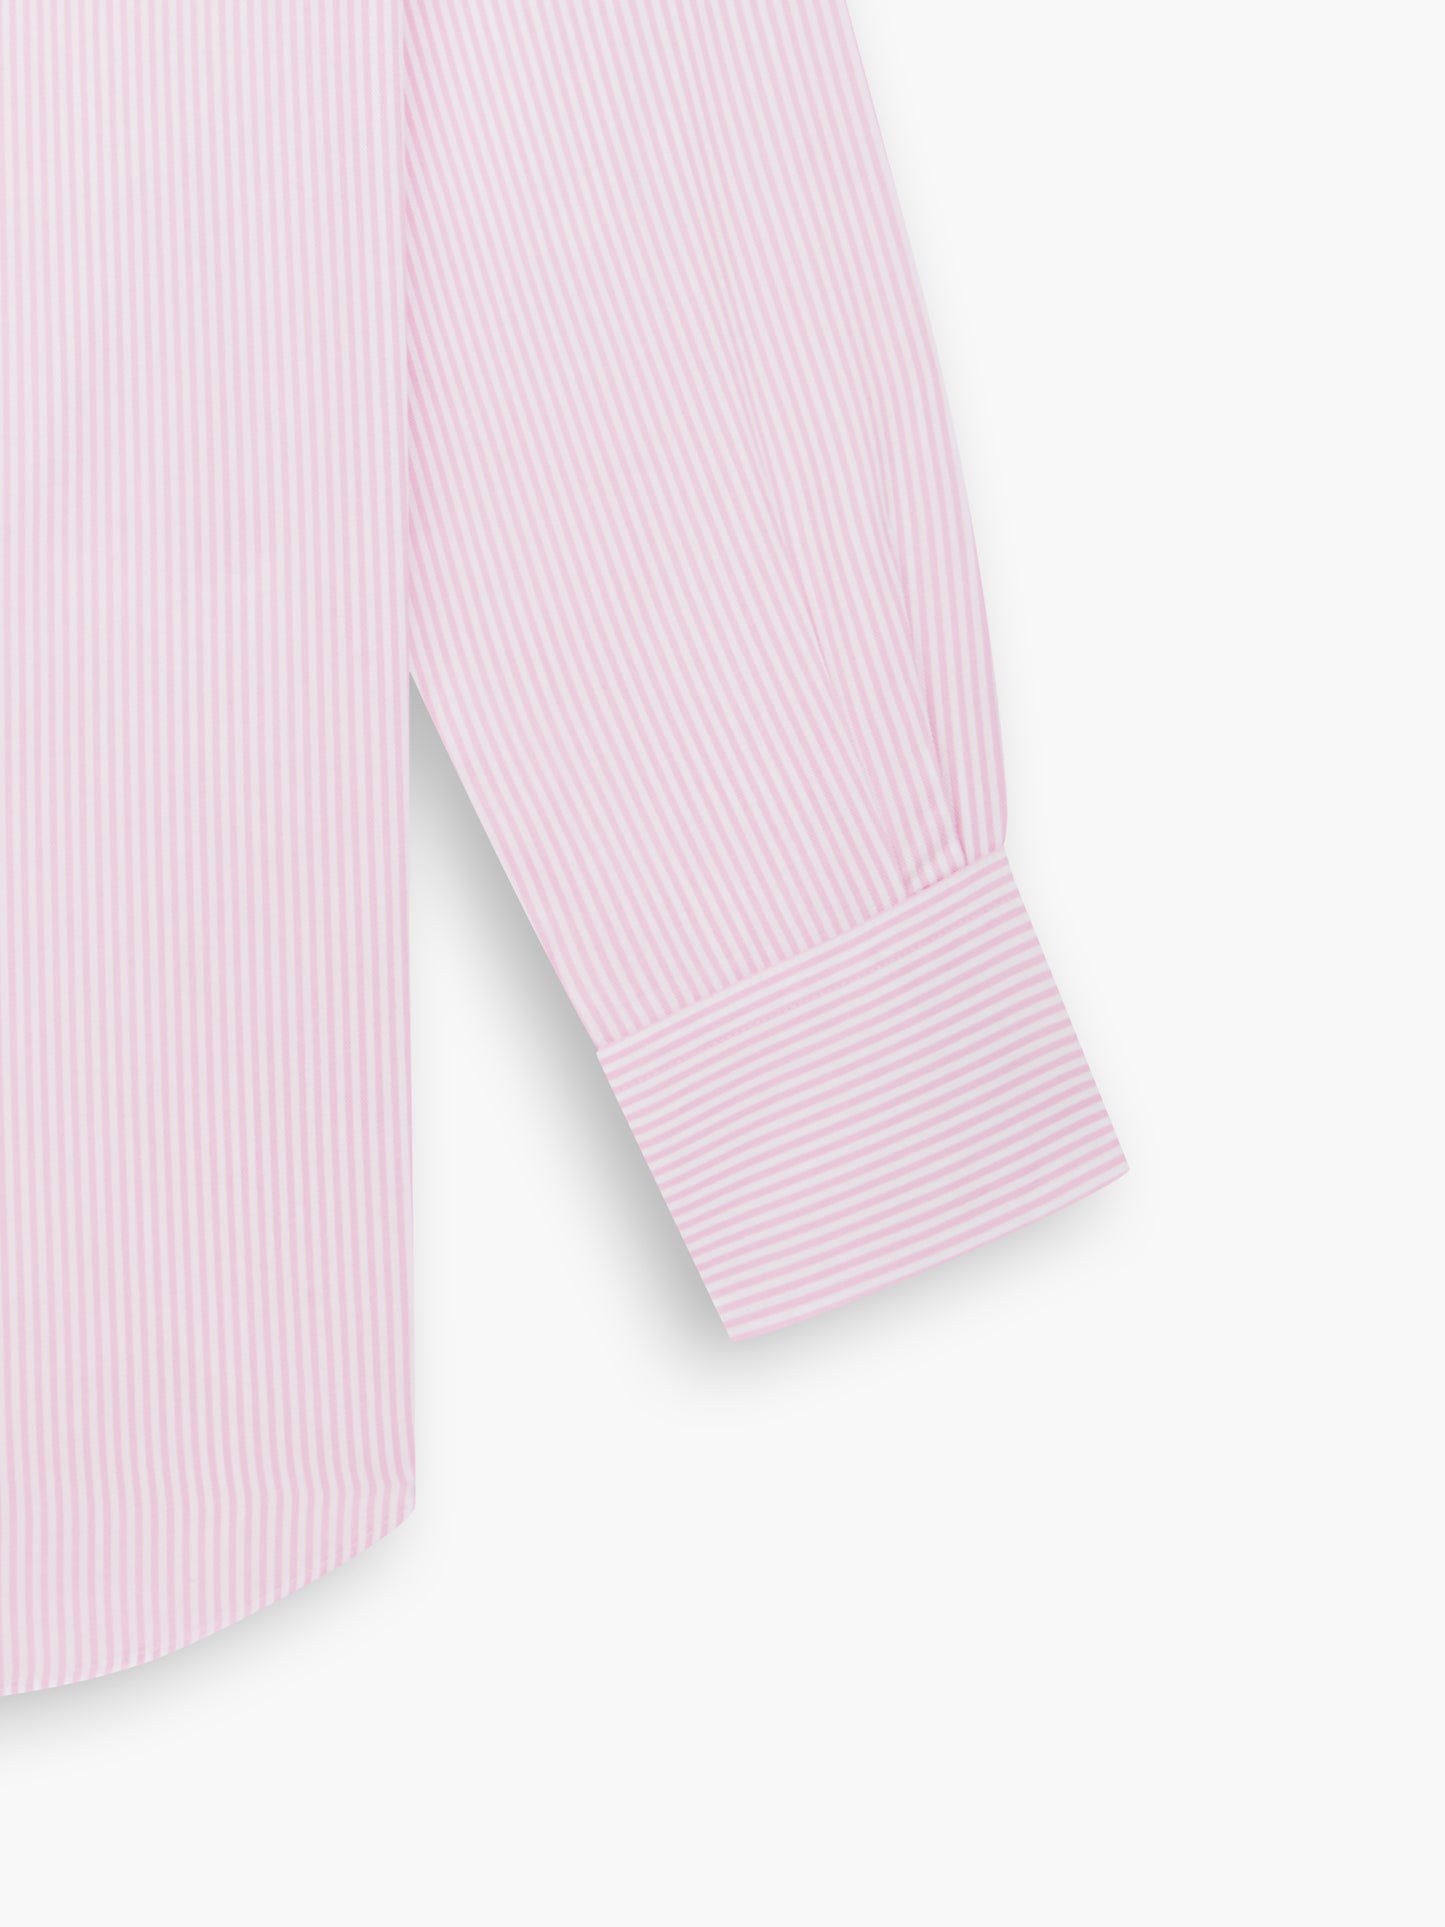 Non-Iron Pink Bengal Stripe Twill Slim Fit Single Cuff Classic Collar Shirt